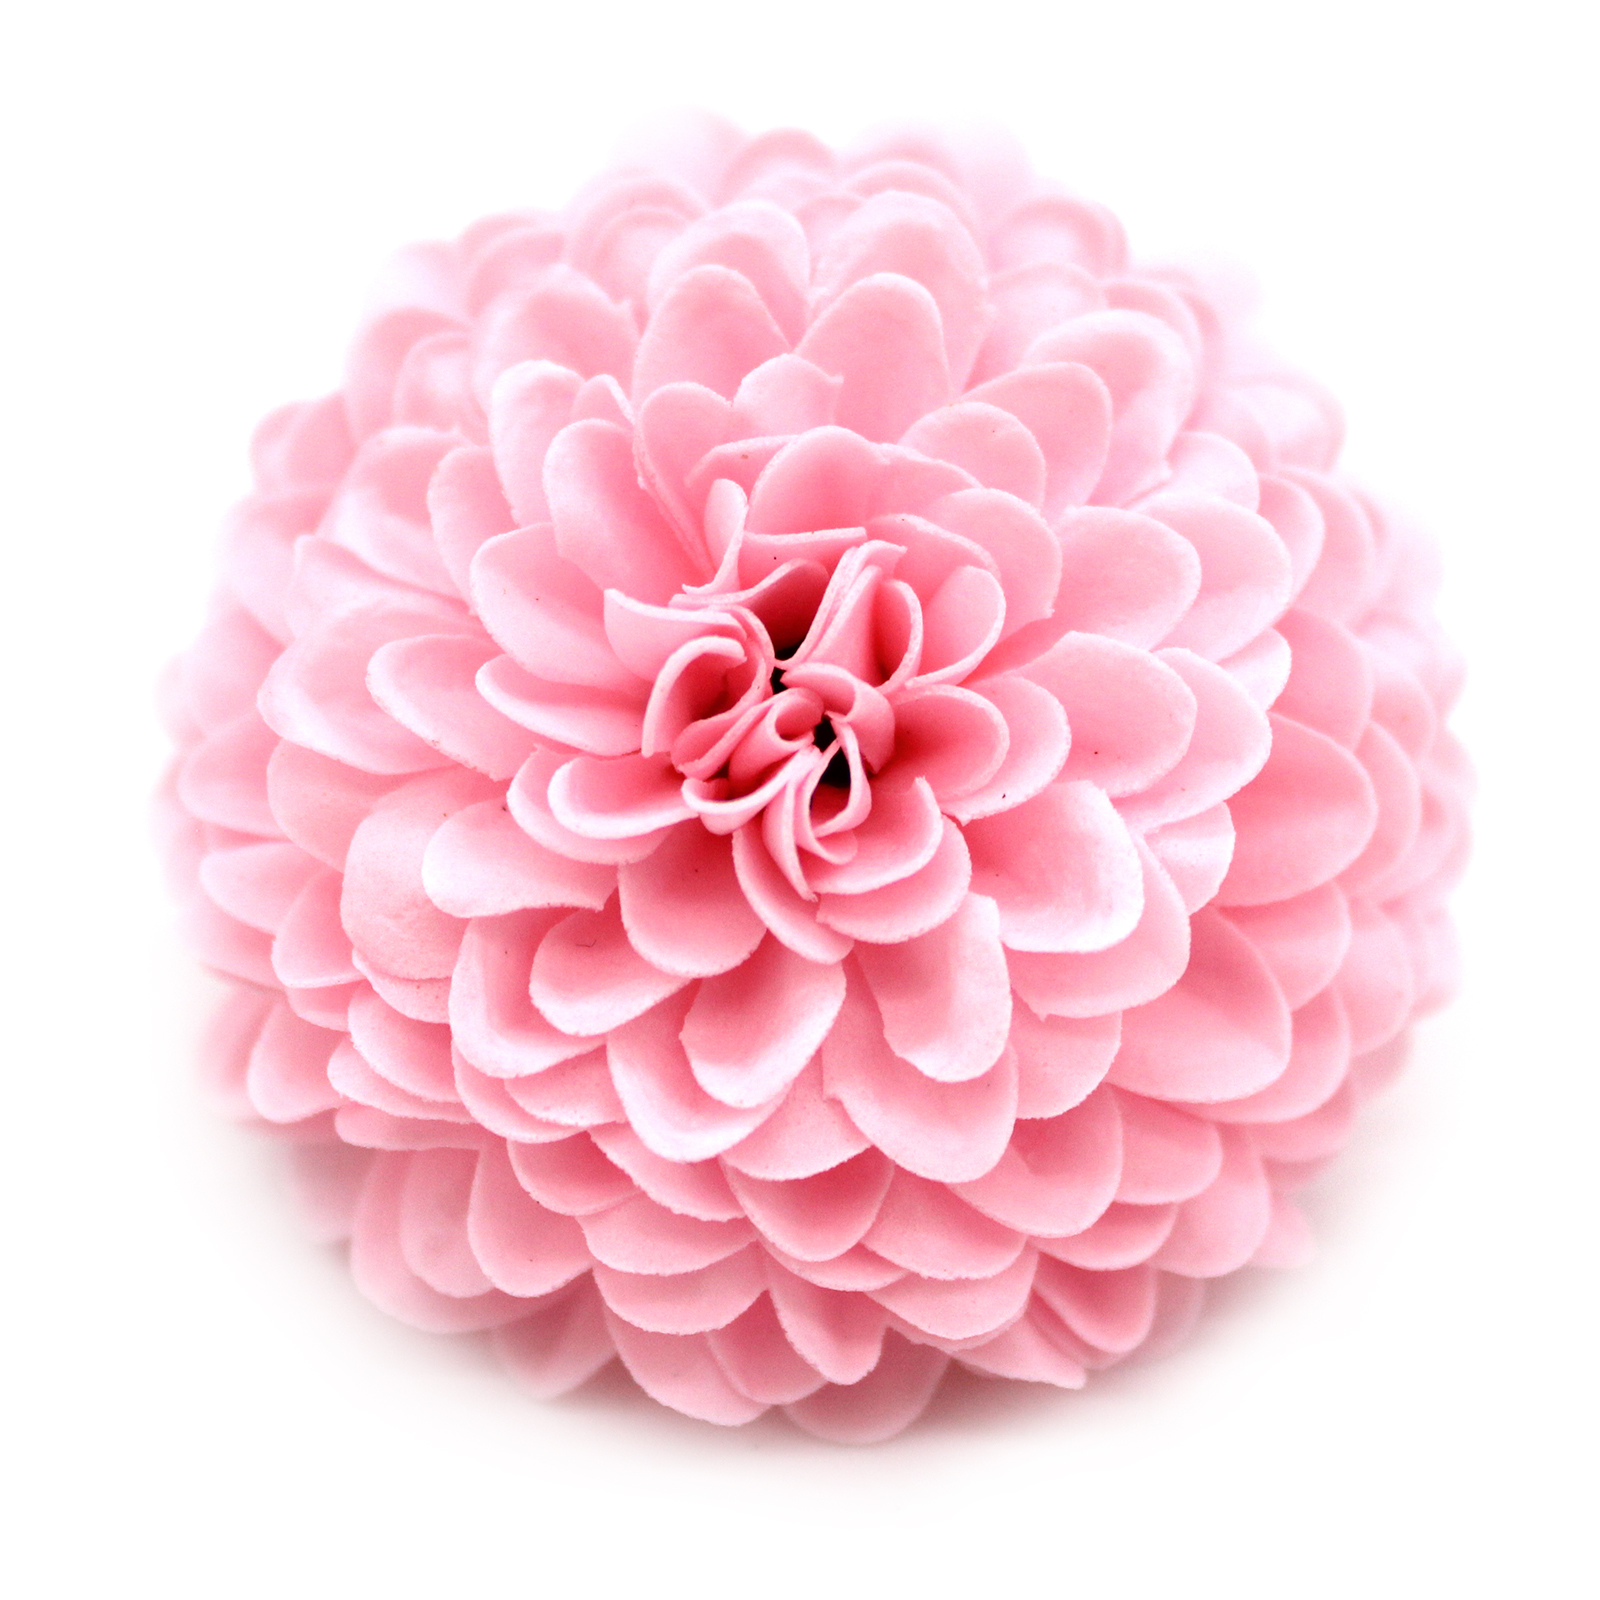 10 x Craft Soap Flowers - Small Chrysanthemum - Light Pink